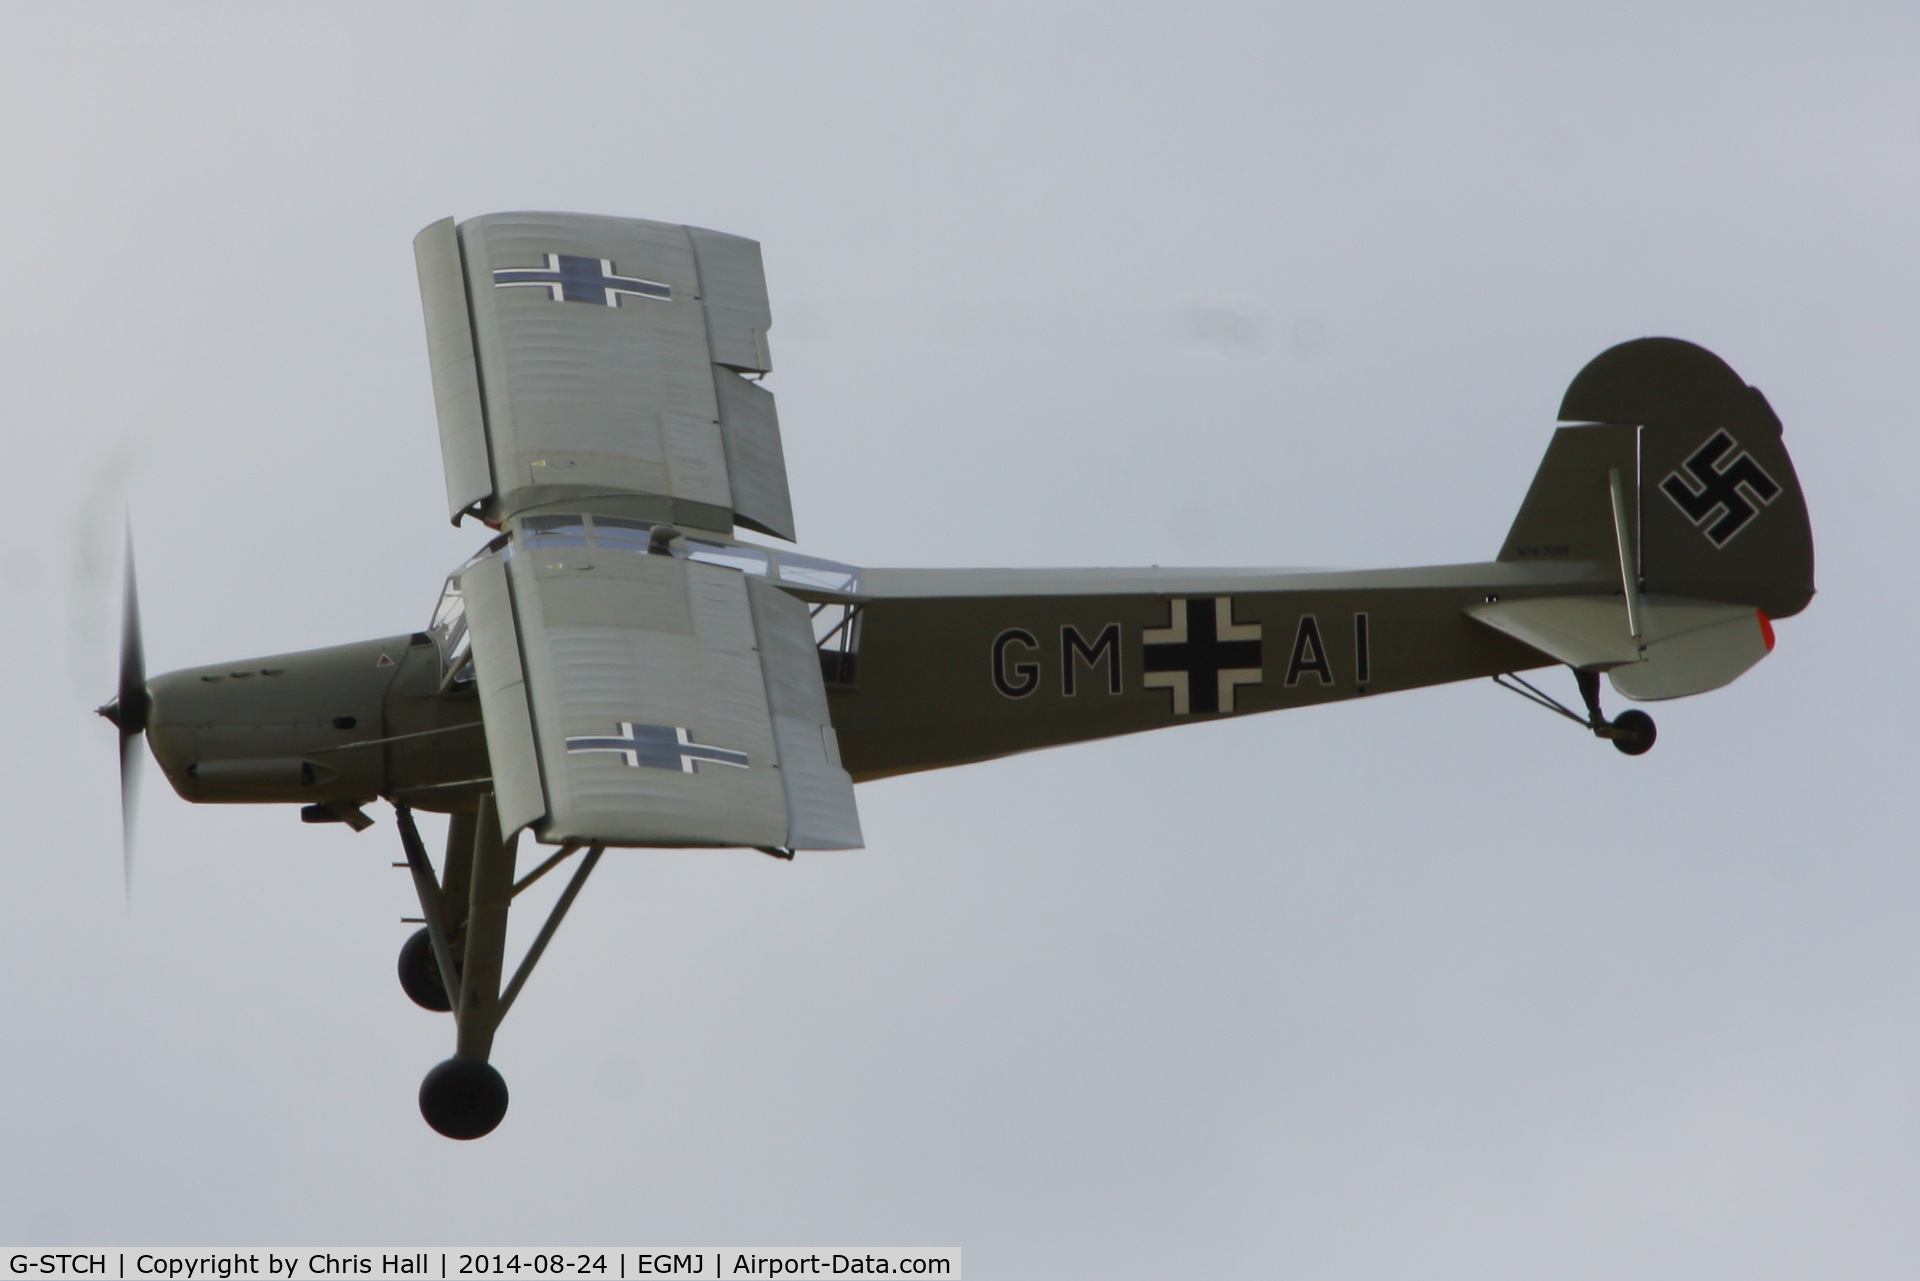 G-STCH, 1942 Fieseler Fi-156A-1 Storch C/N 2088, at the Little Gransden Airshow 2014